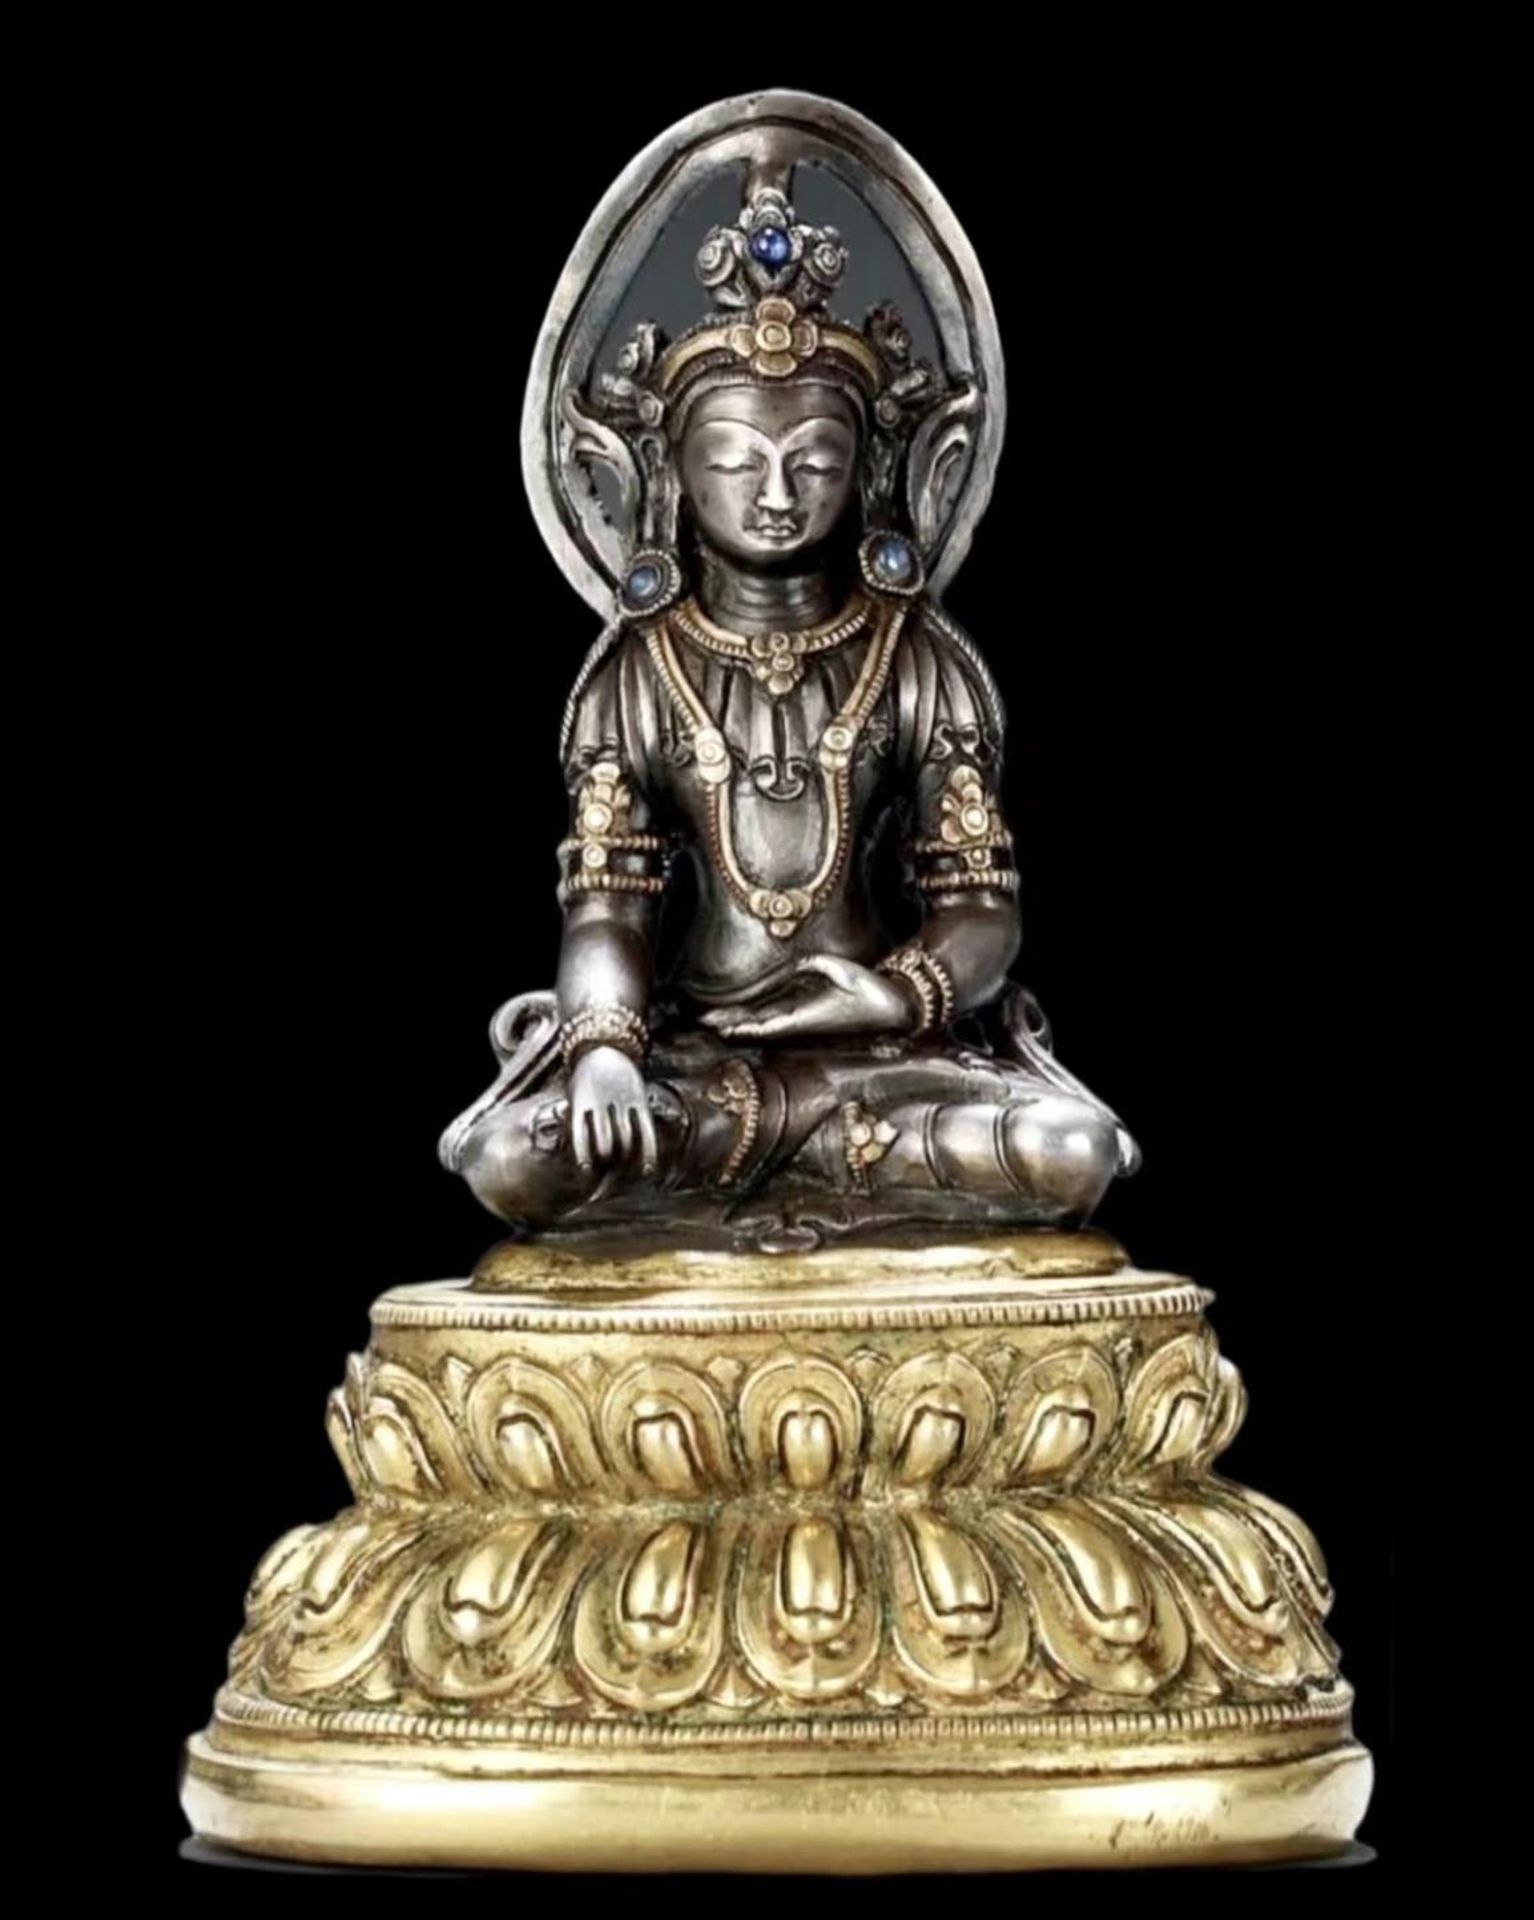 A 17th-century seated Buddha statue